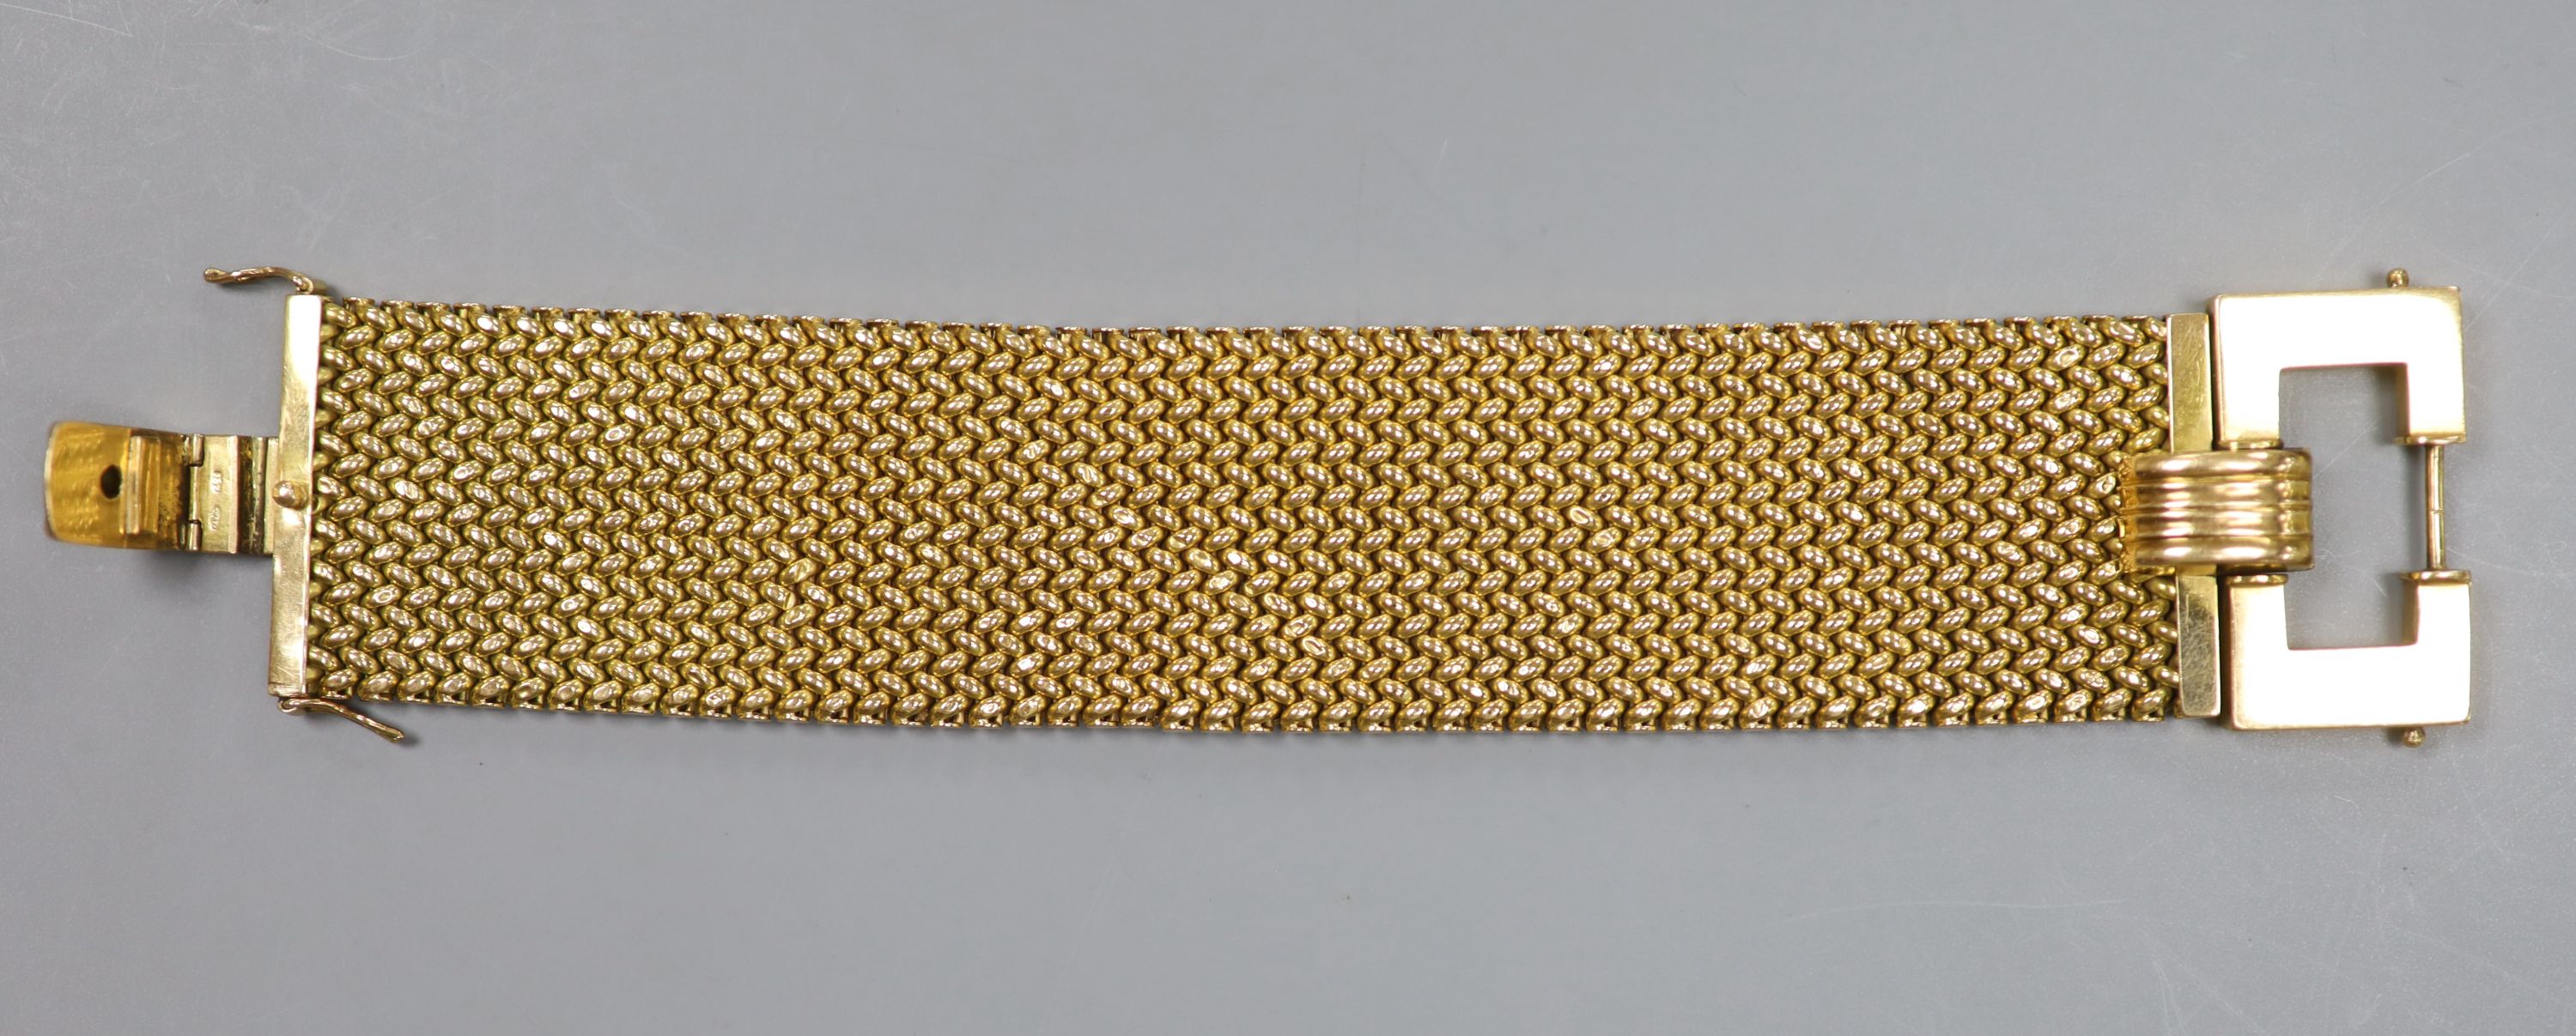 A mid 20th century Italian 750 yellow metal woven link bracelet